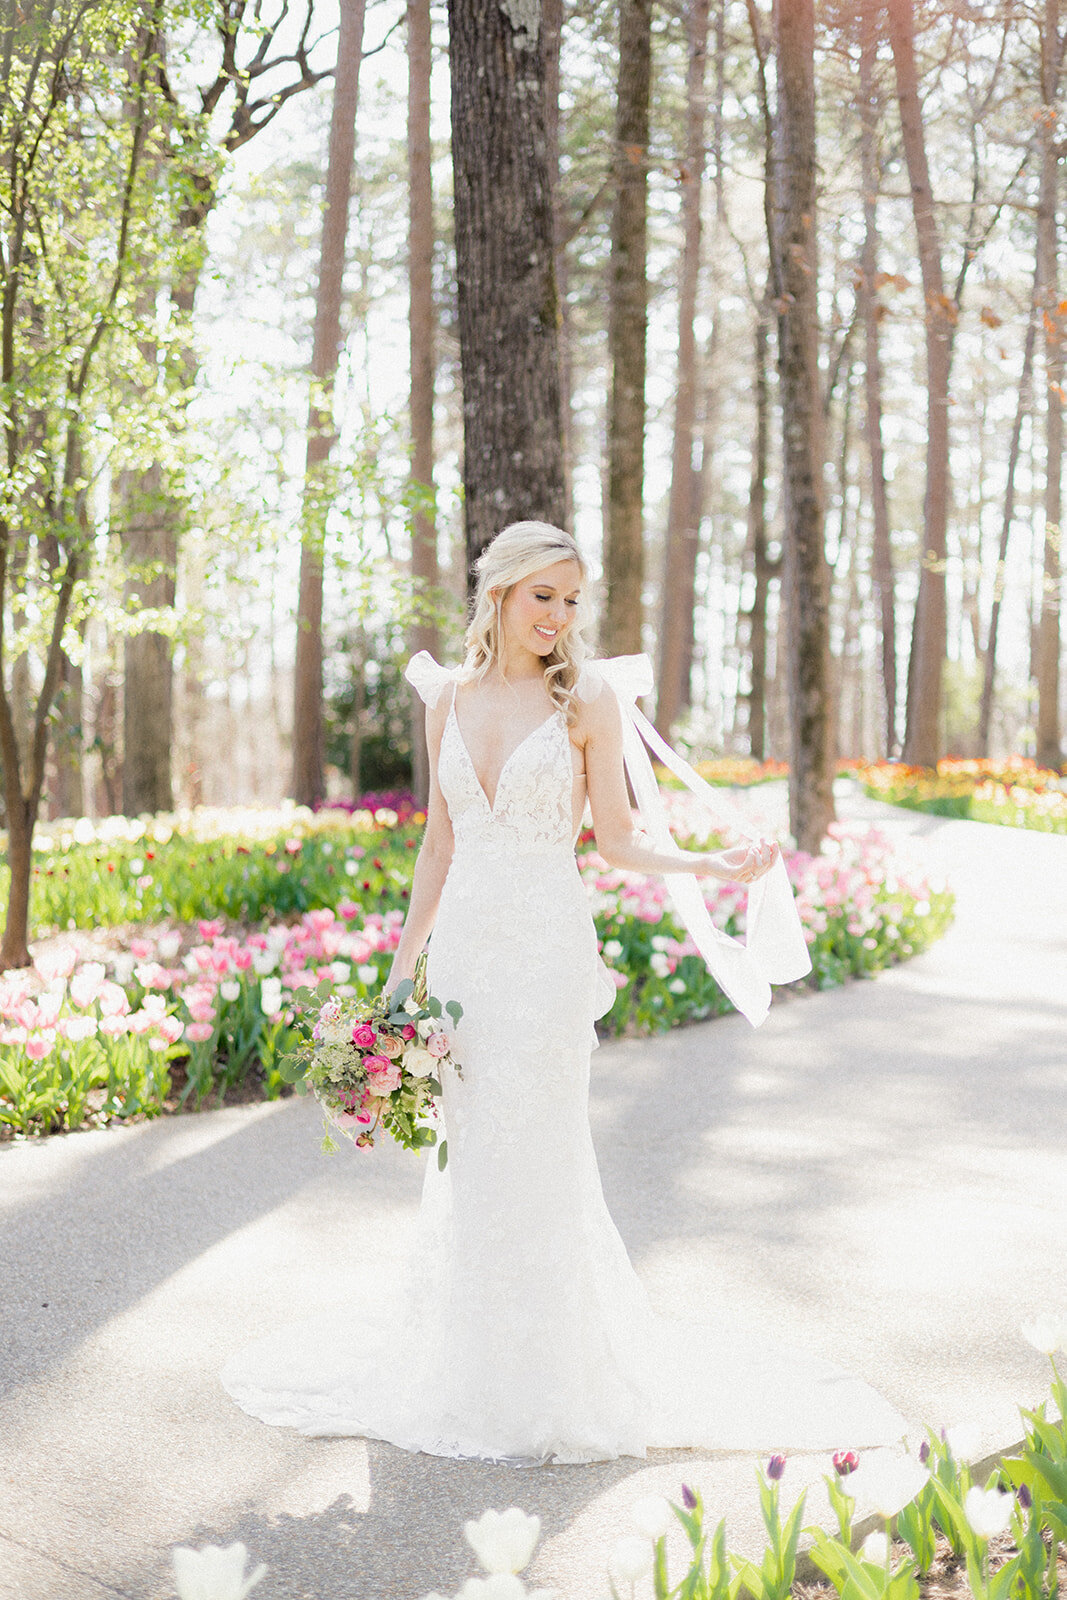 Fine art wedding photography based in central Arkansas